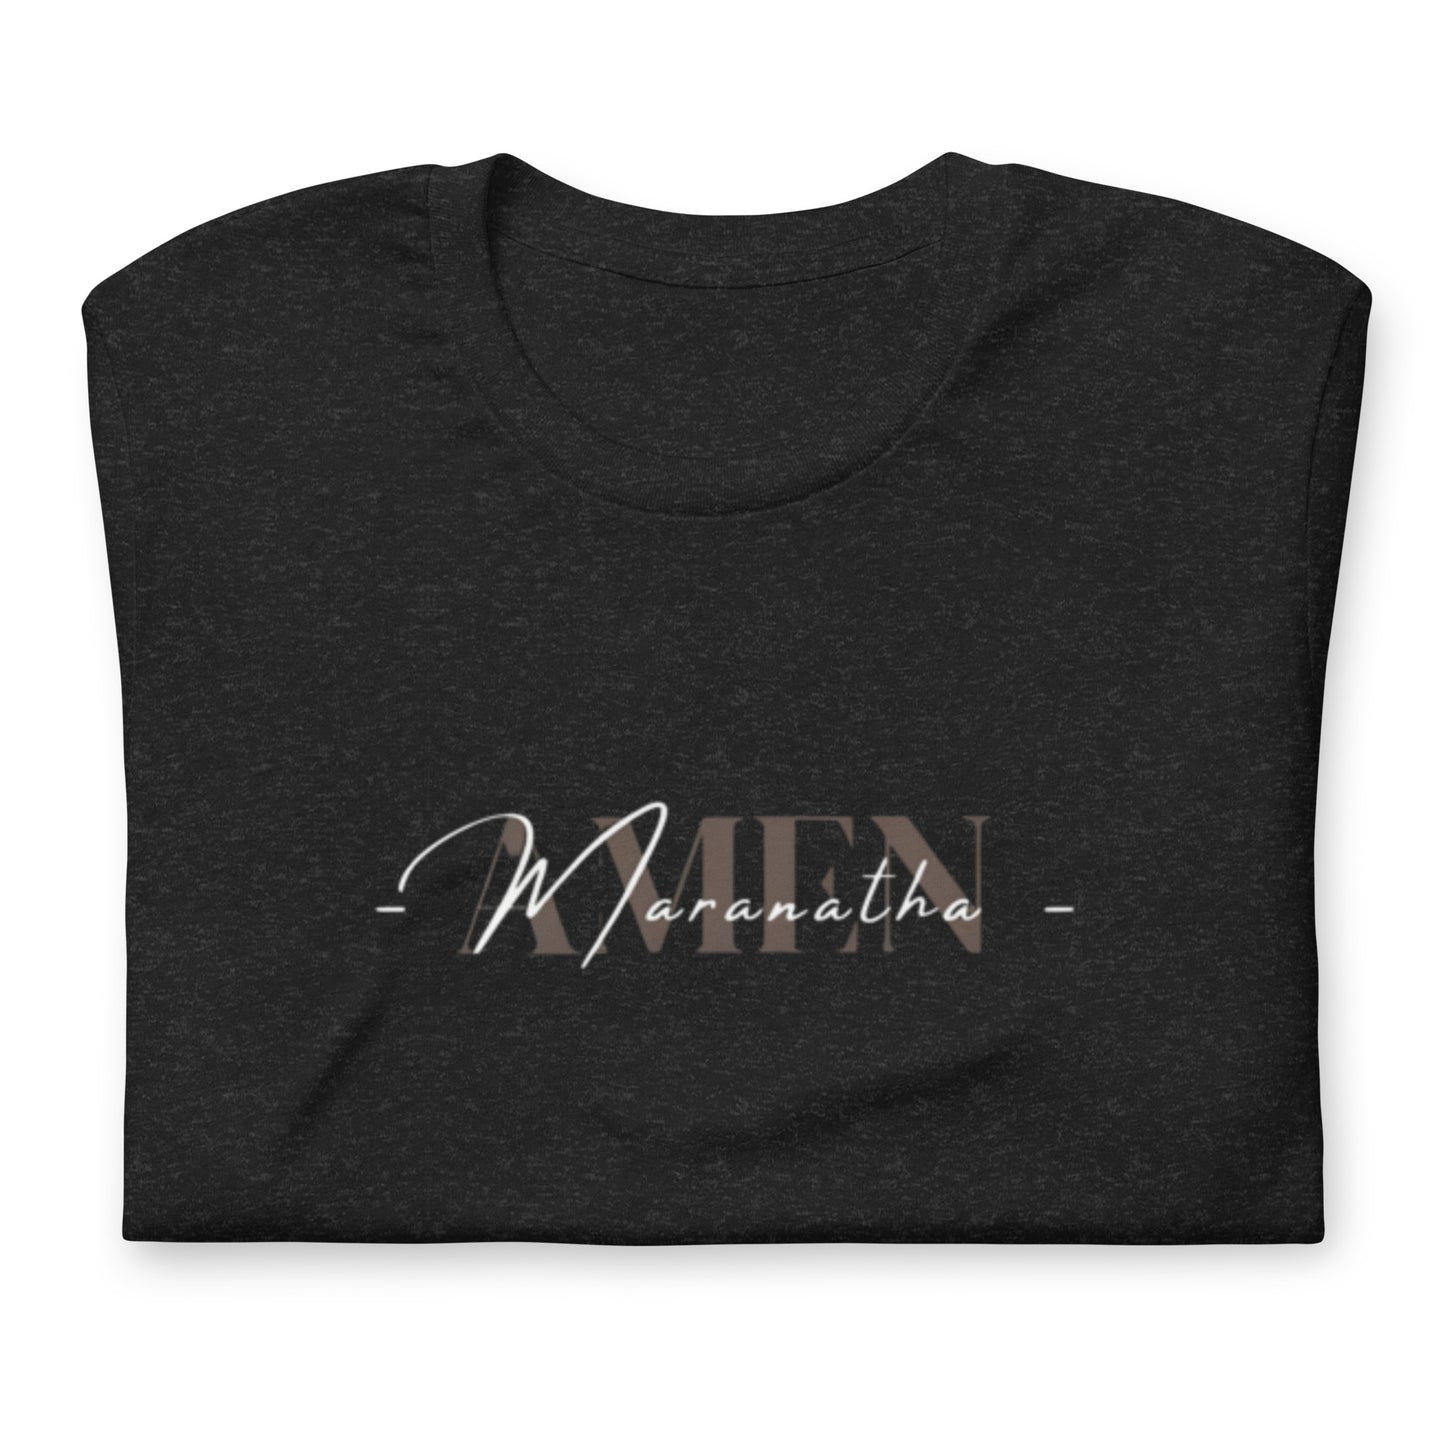 T-shirt noir 100% coton unisexe Maranatha